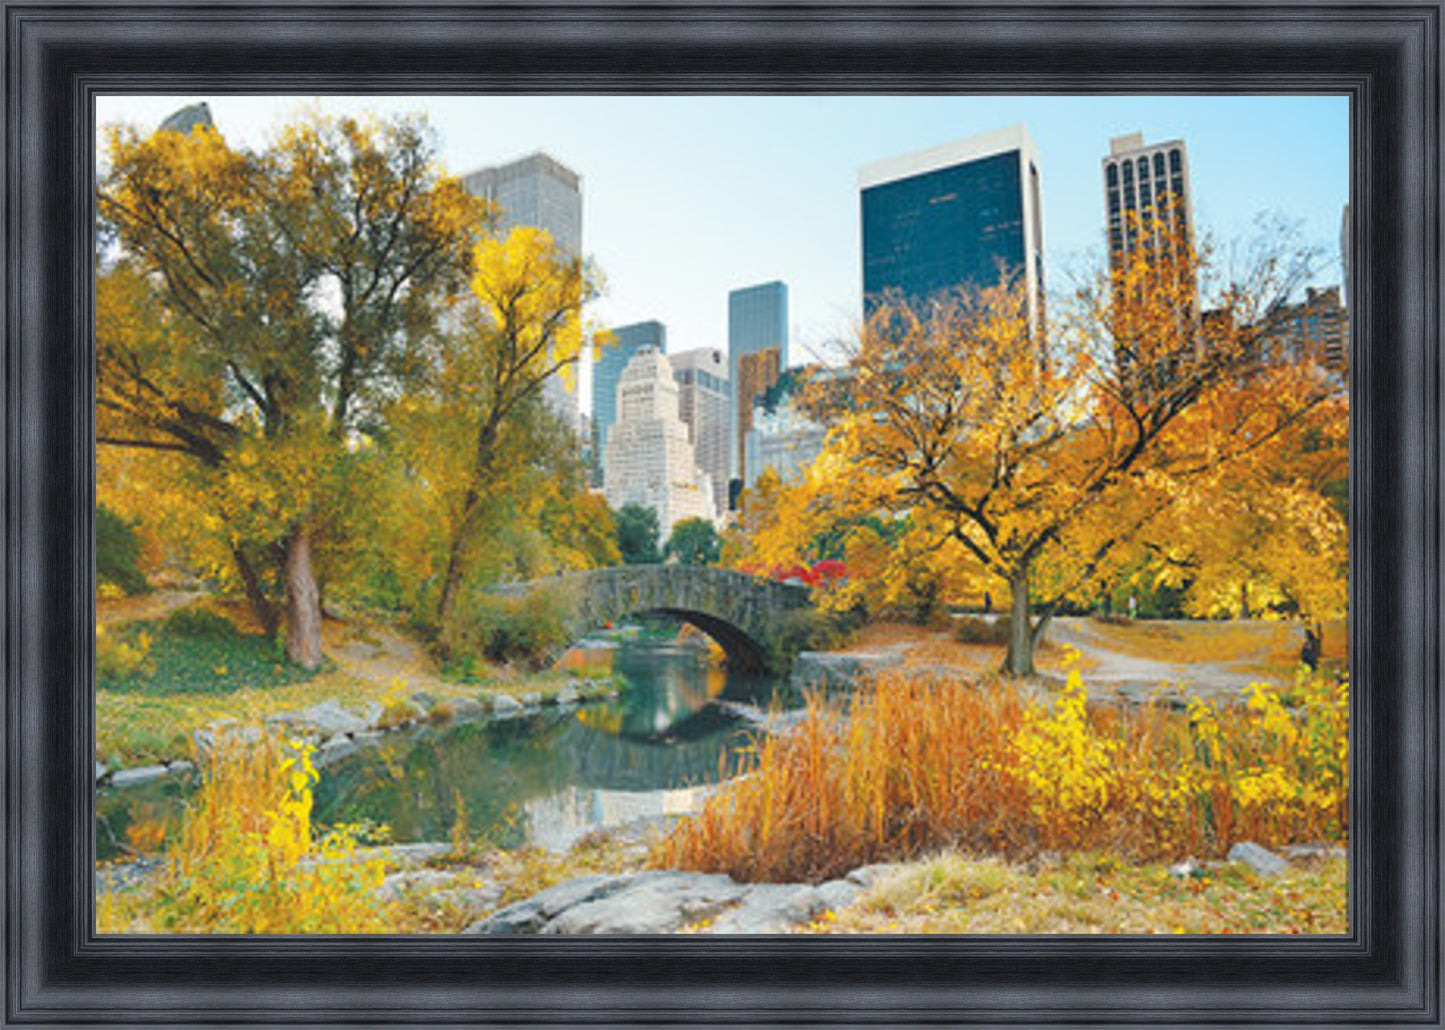 Central Park in Autumn - Slim Frame